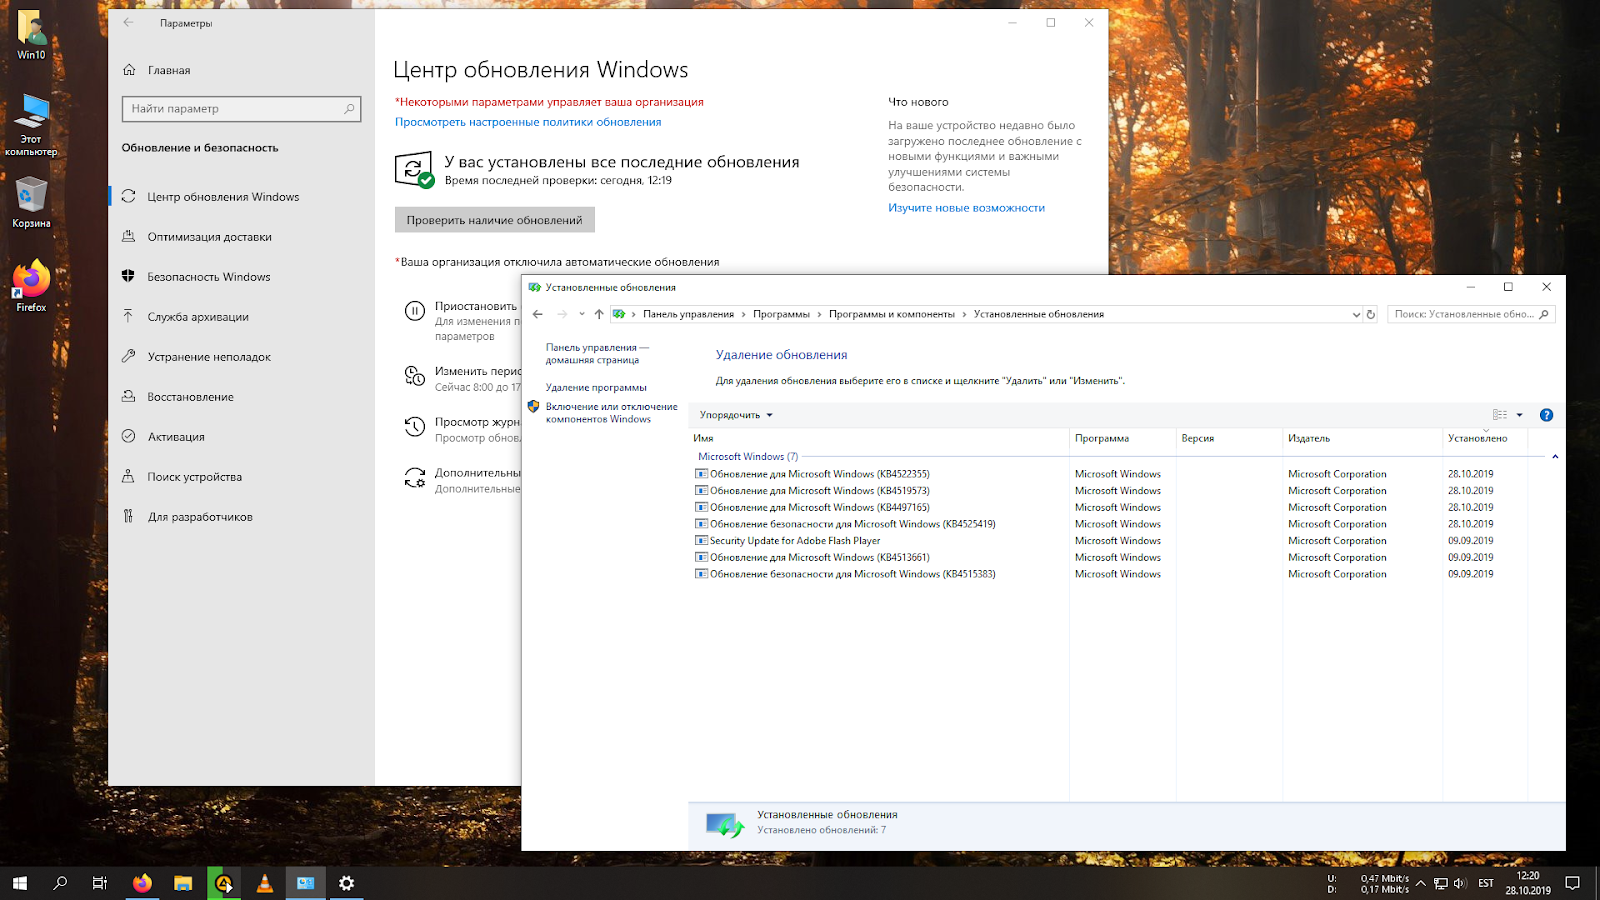 Windows 10 Pro VL 1903 Anti-Spy Edition build 18362.295 u. Ошибка требуется Windows 10 версии 1903.